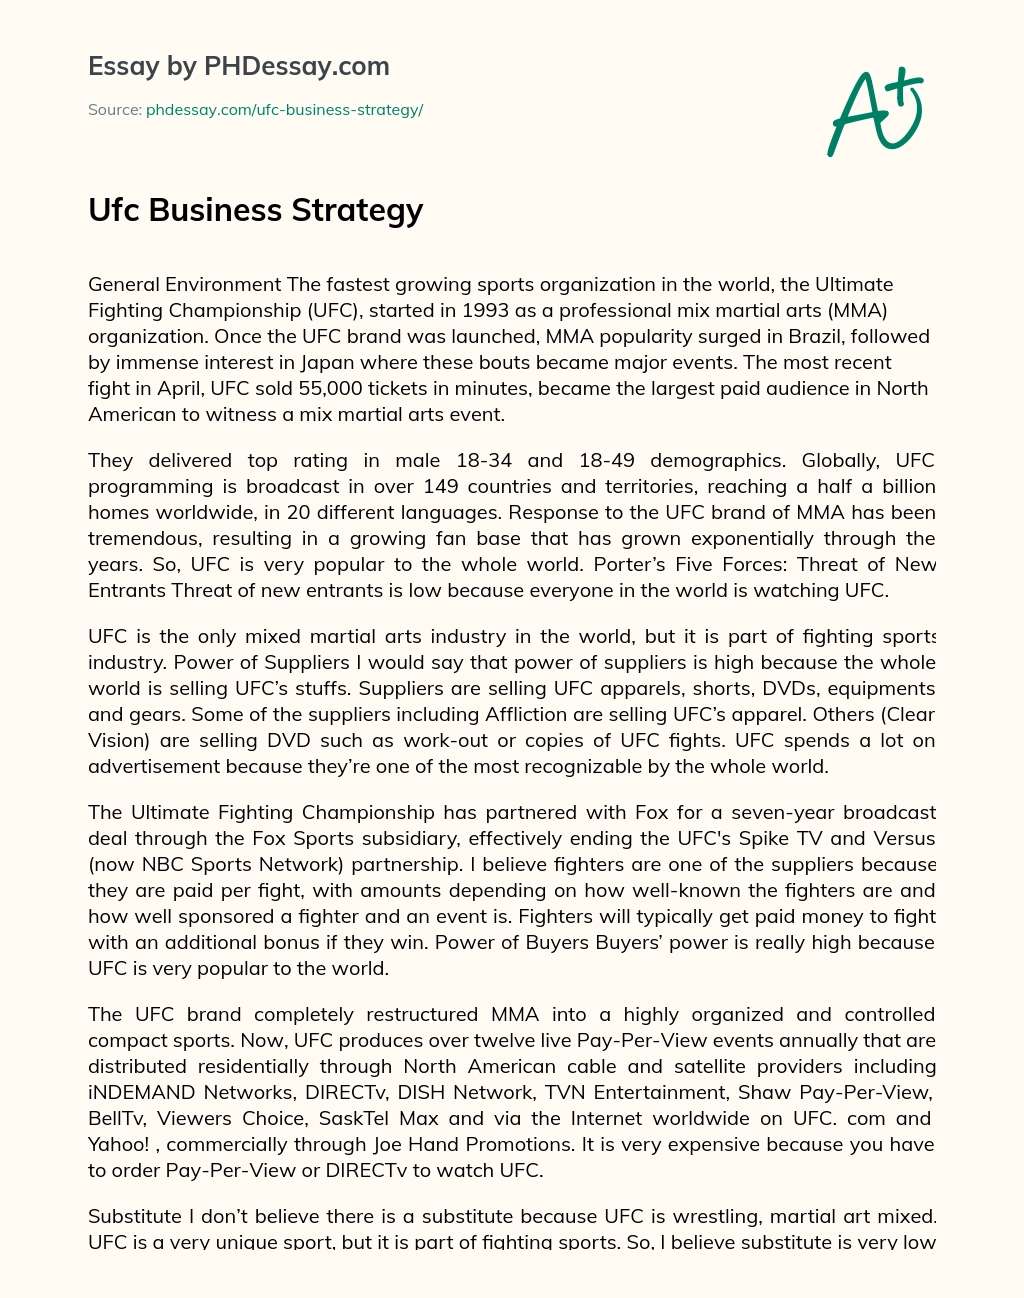 Ufc Business Strategy essay